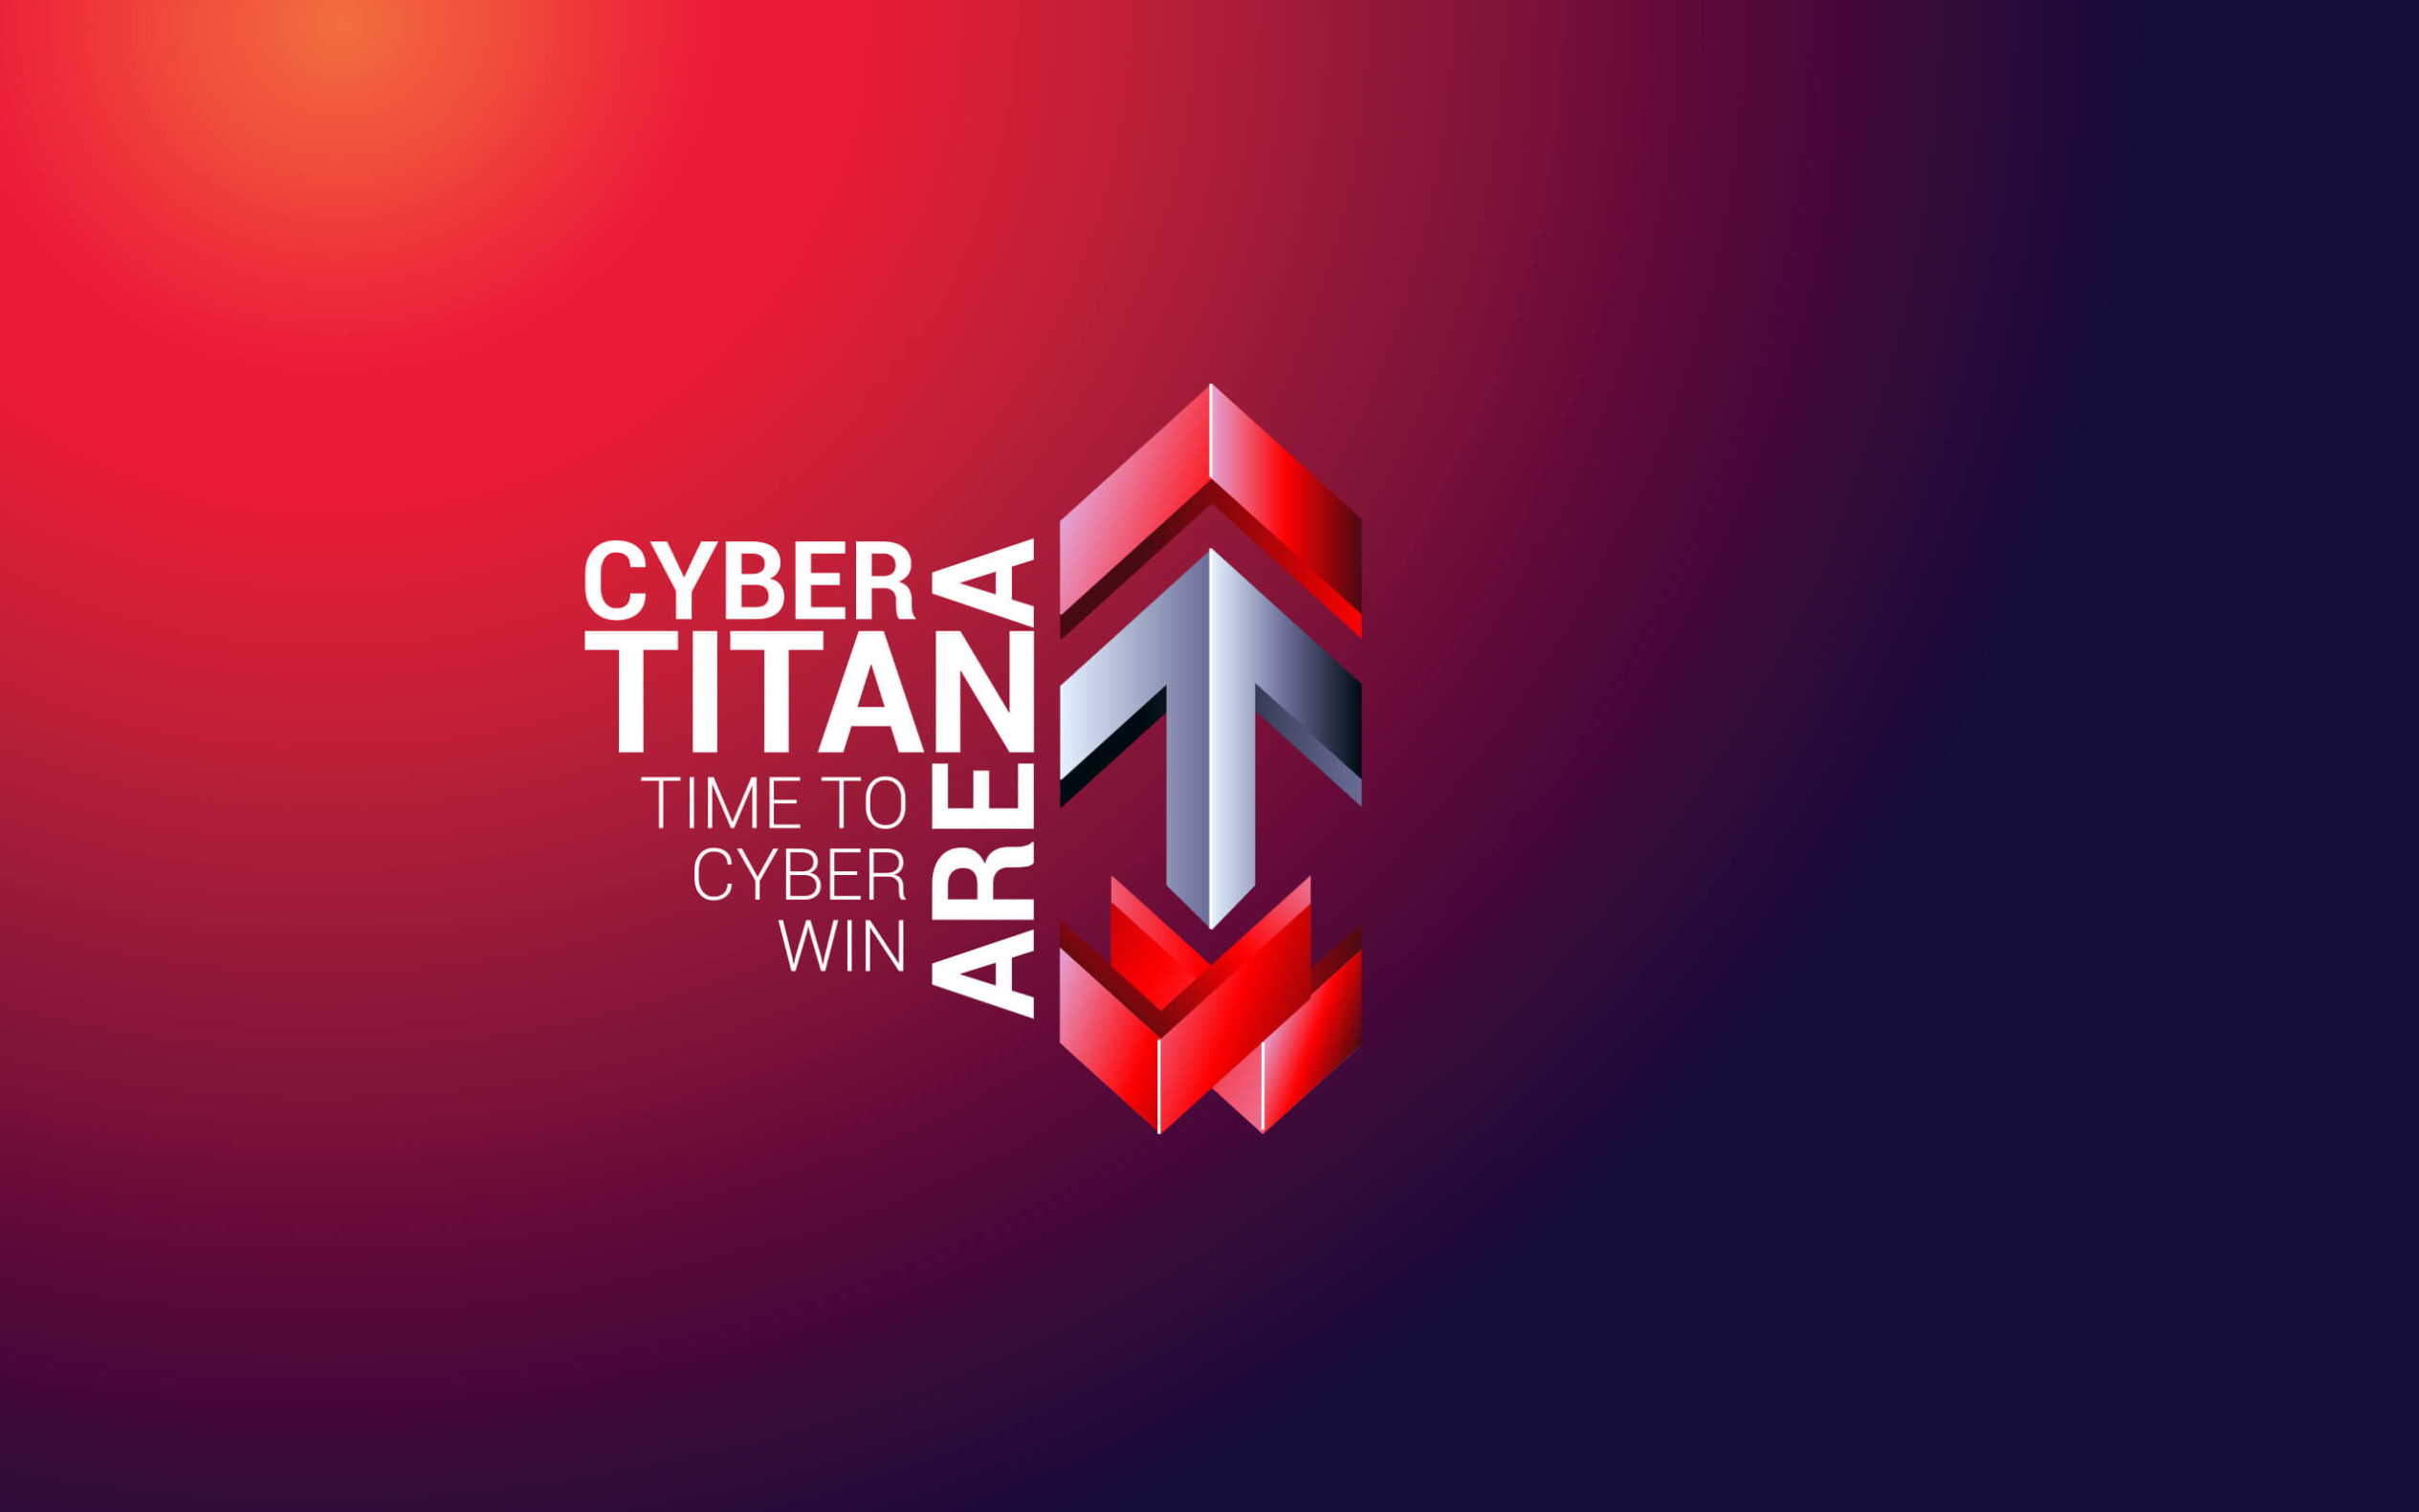 Cyber Titan Arena Sport club logo